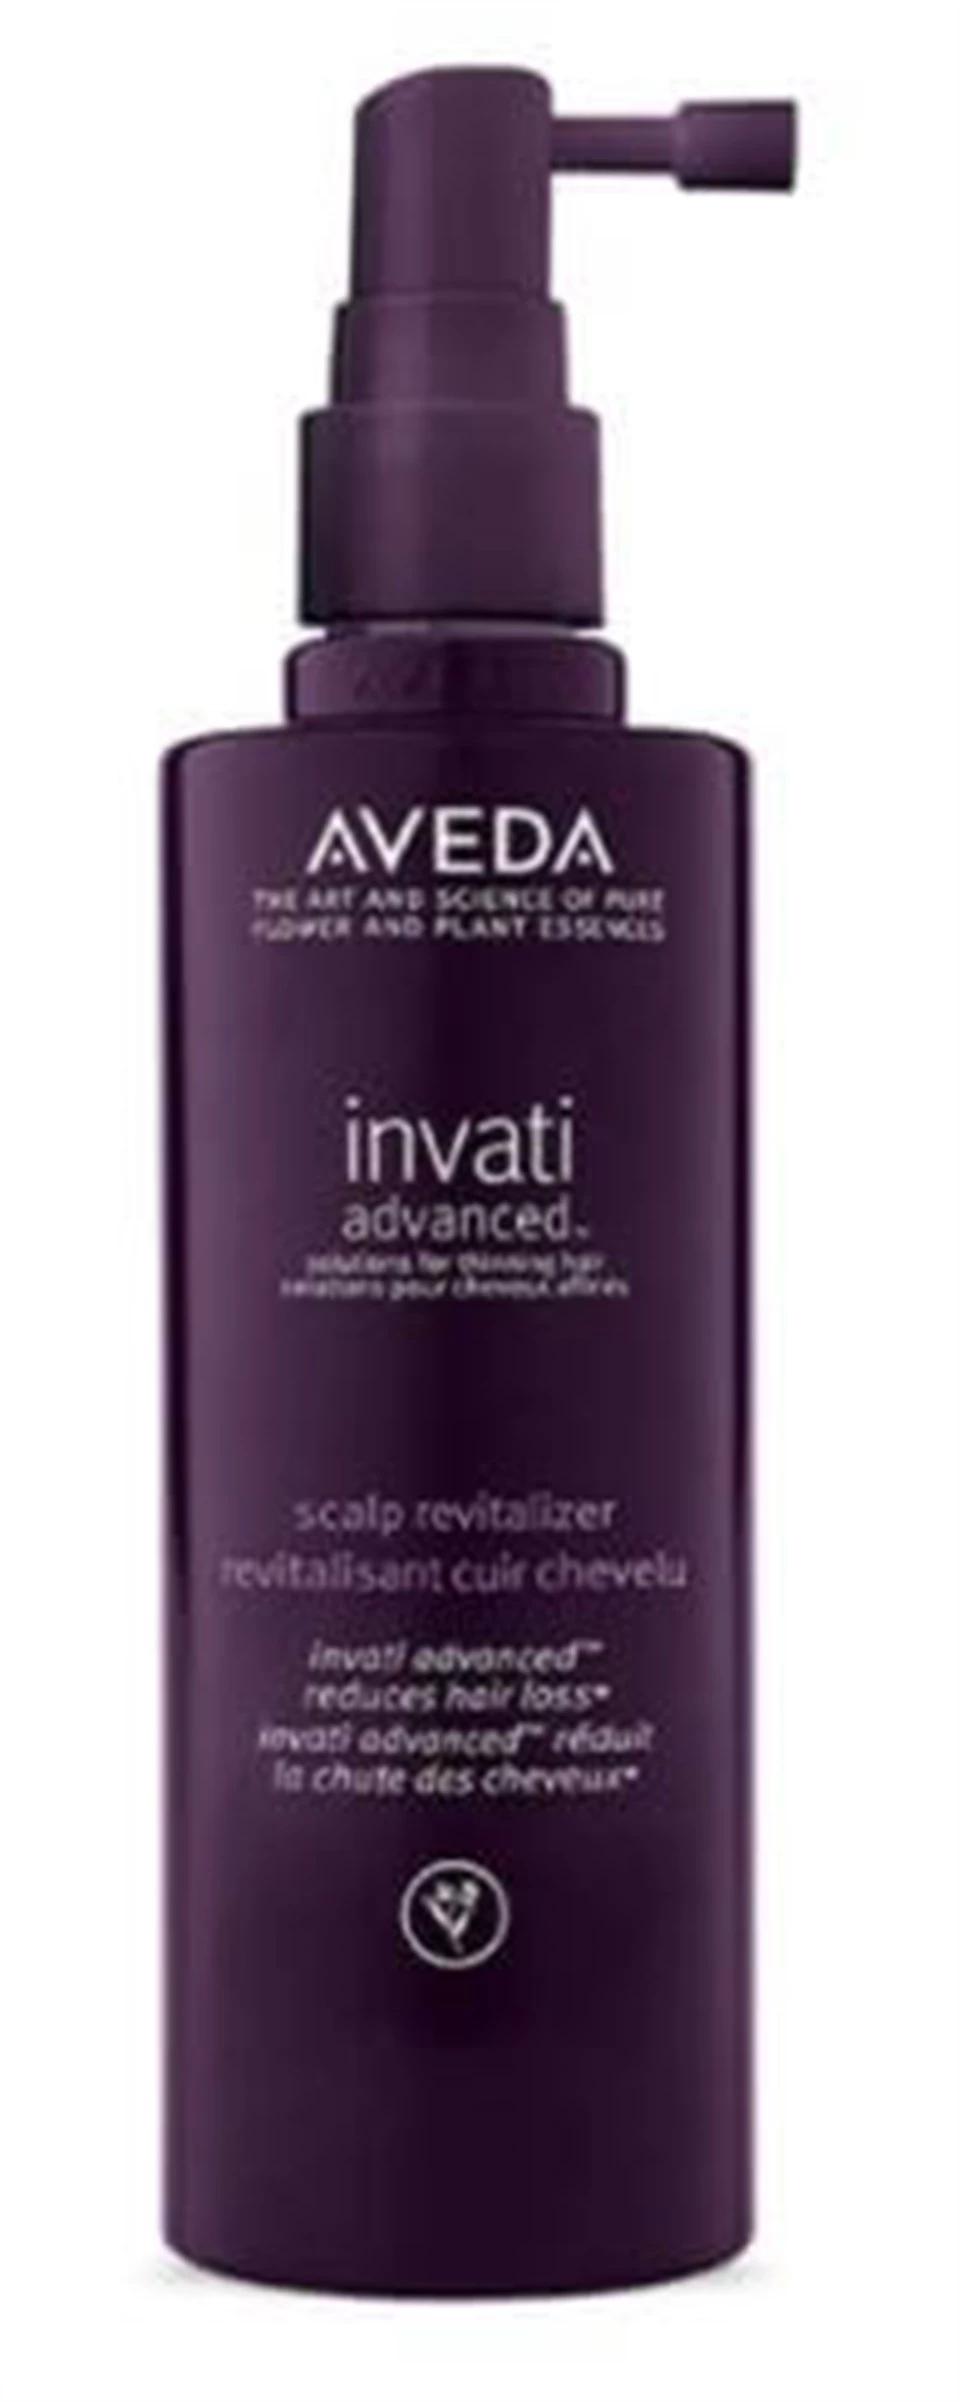 Aveda Invati Advanced Dökülme Karşıtı Saç Serumu